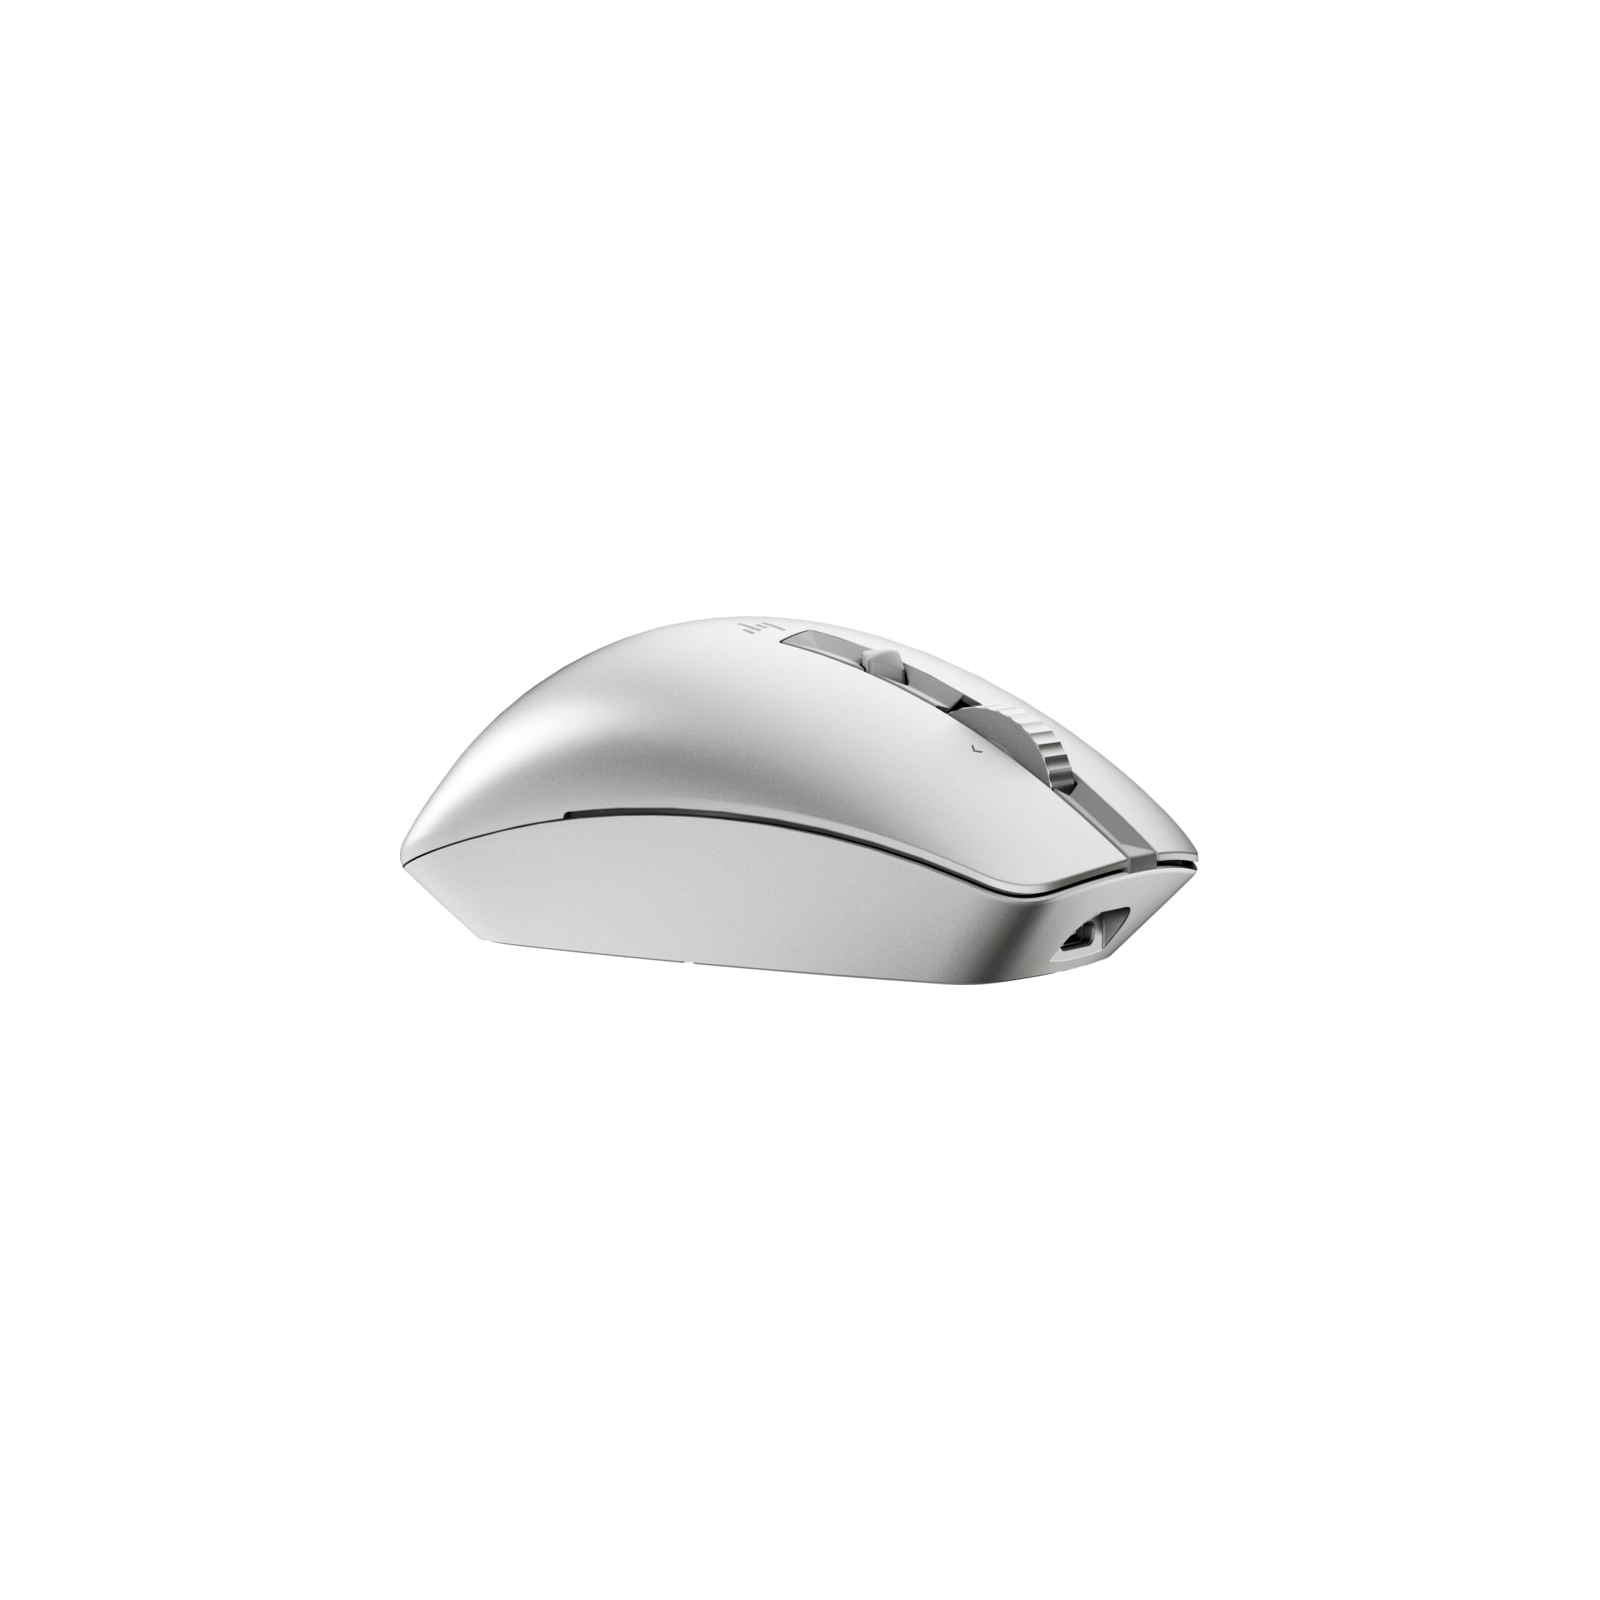 Мышка HP Creator 930 Wireless Silver (1D0K9AA) изображение 3